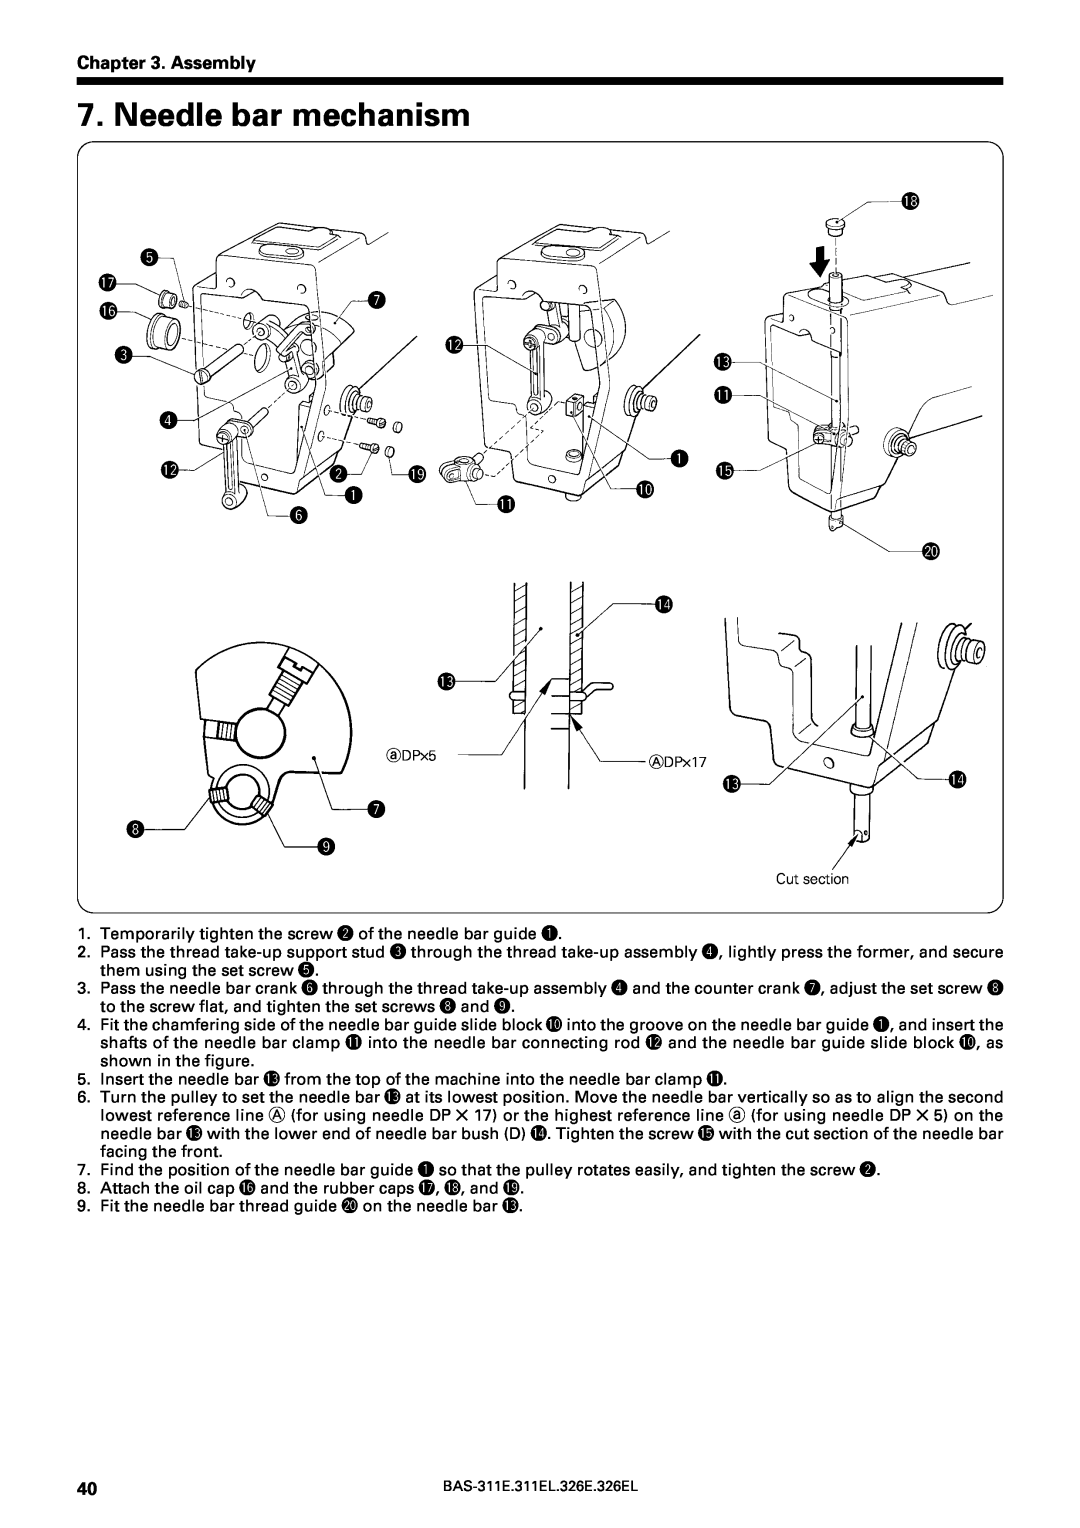 Brother BAS-311E service manual Needle bar mechanism, Assembly, q !5, 3!4 u i o 